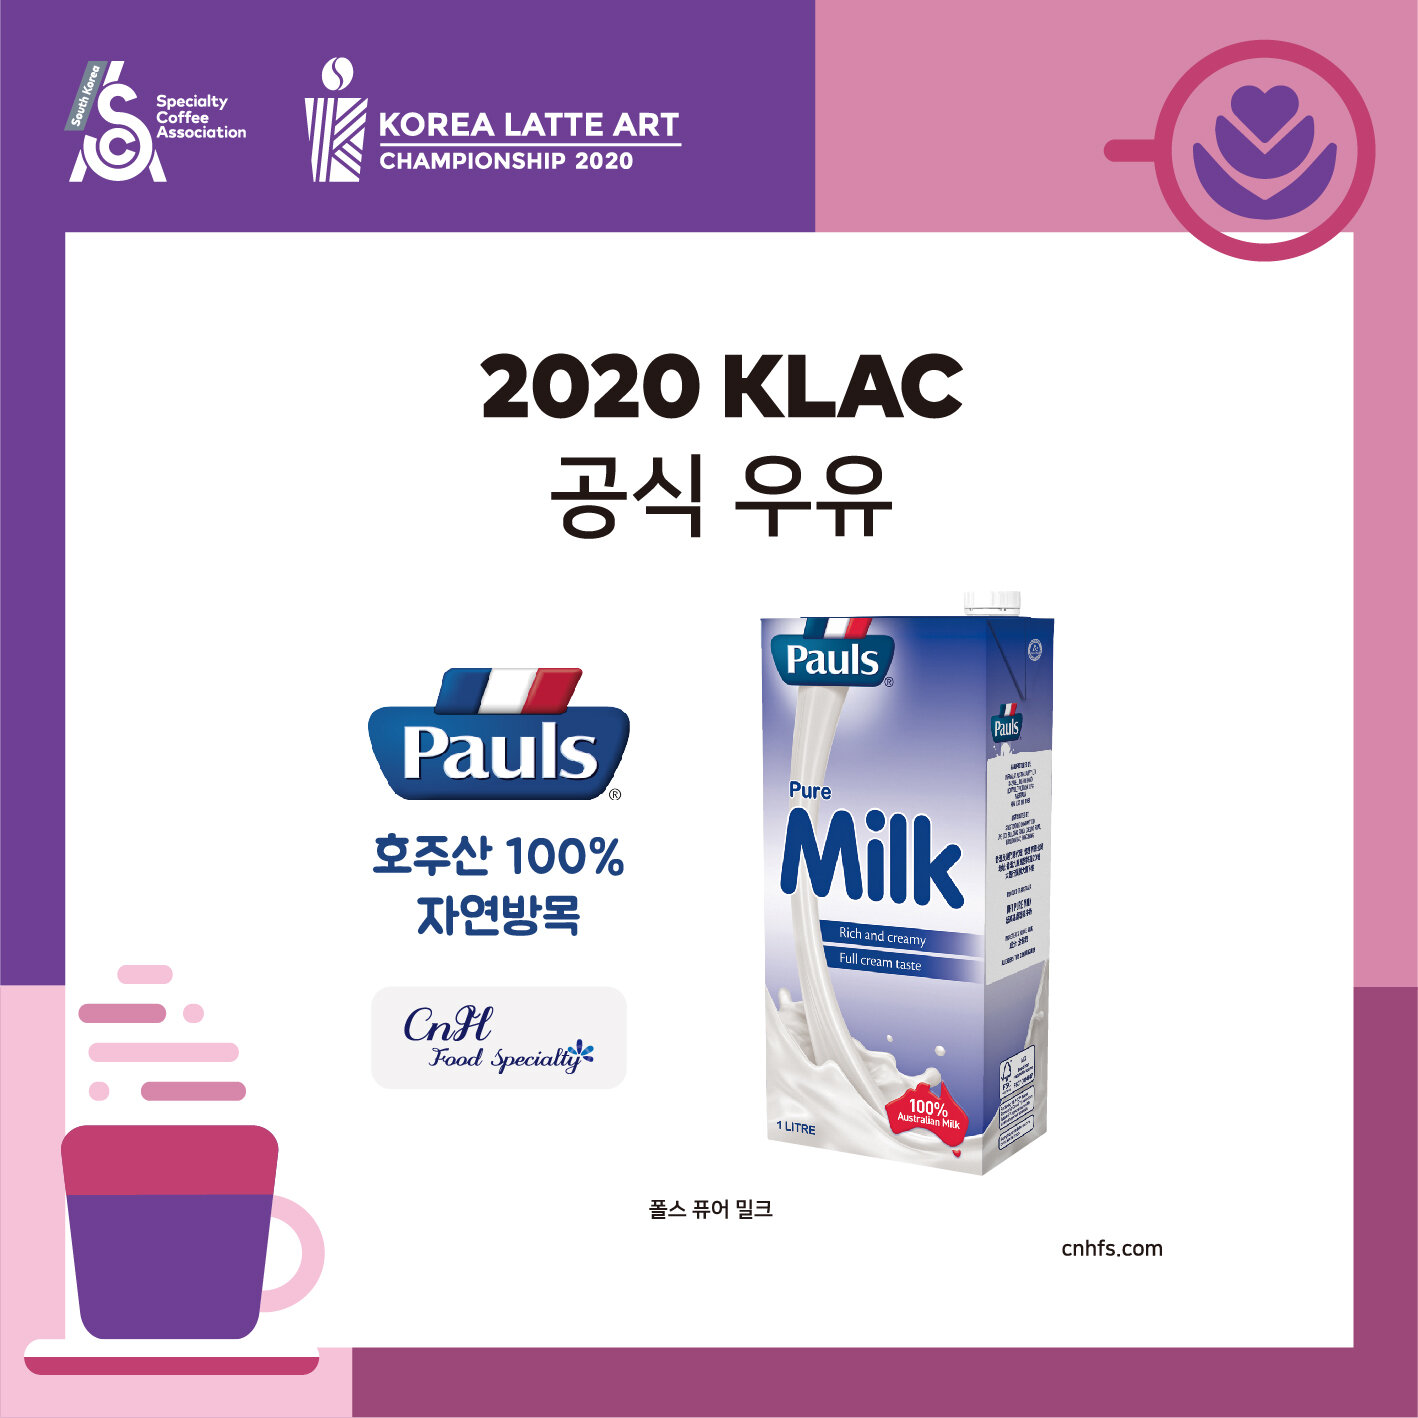 2020 KLAC 공식우유_폴스밀크.jpg